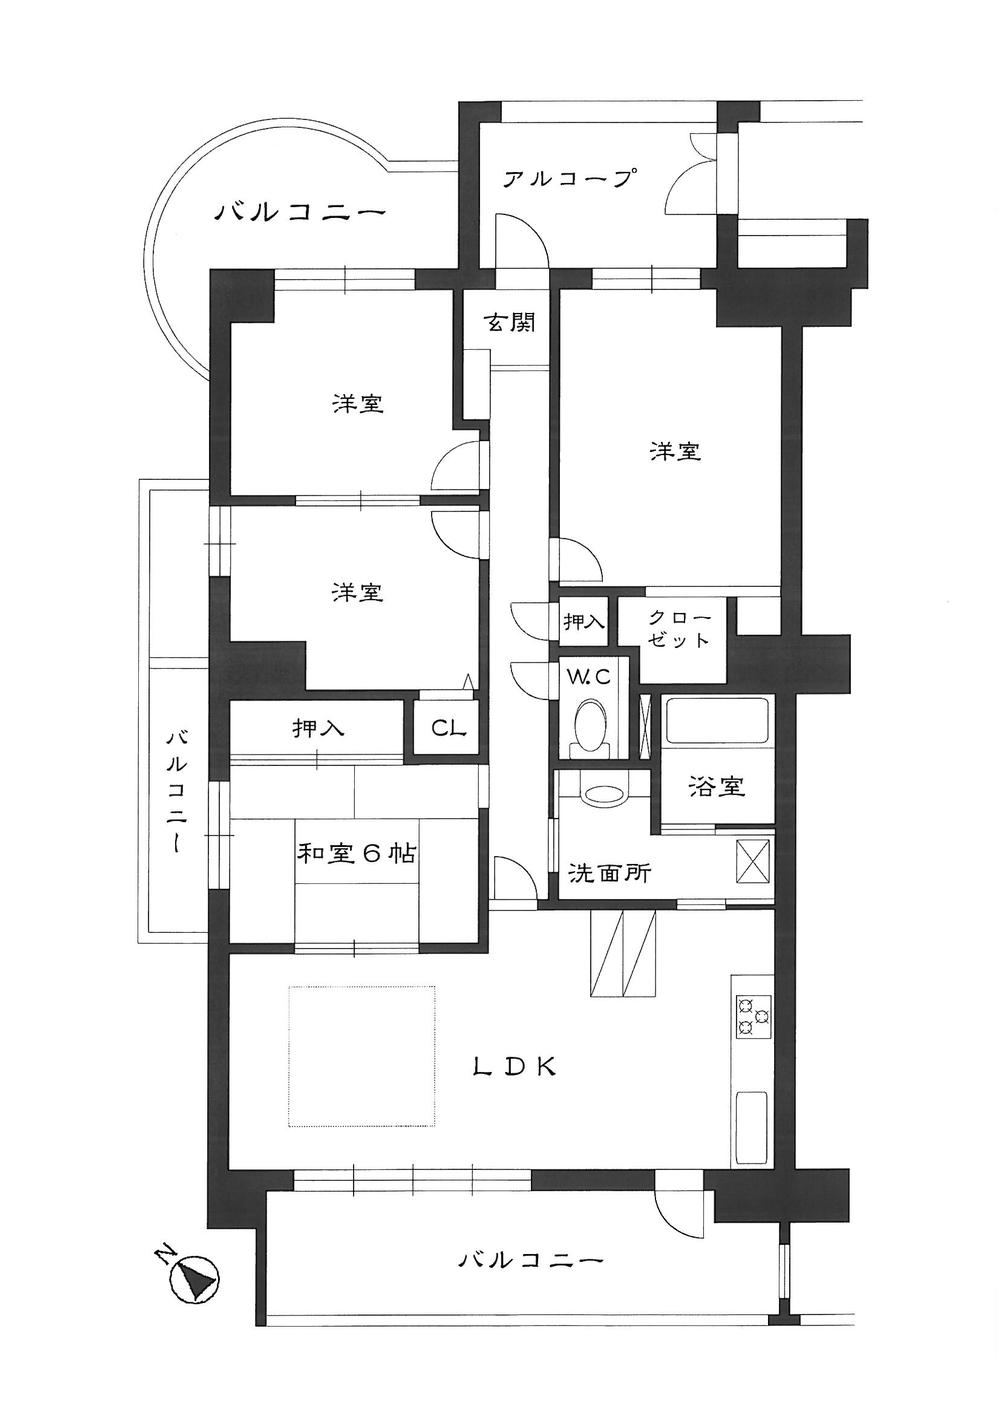 Floor plan. 4LDK, Price 16.5 million yen, Occupied area 97.79 sq m